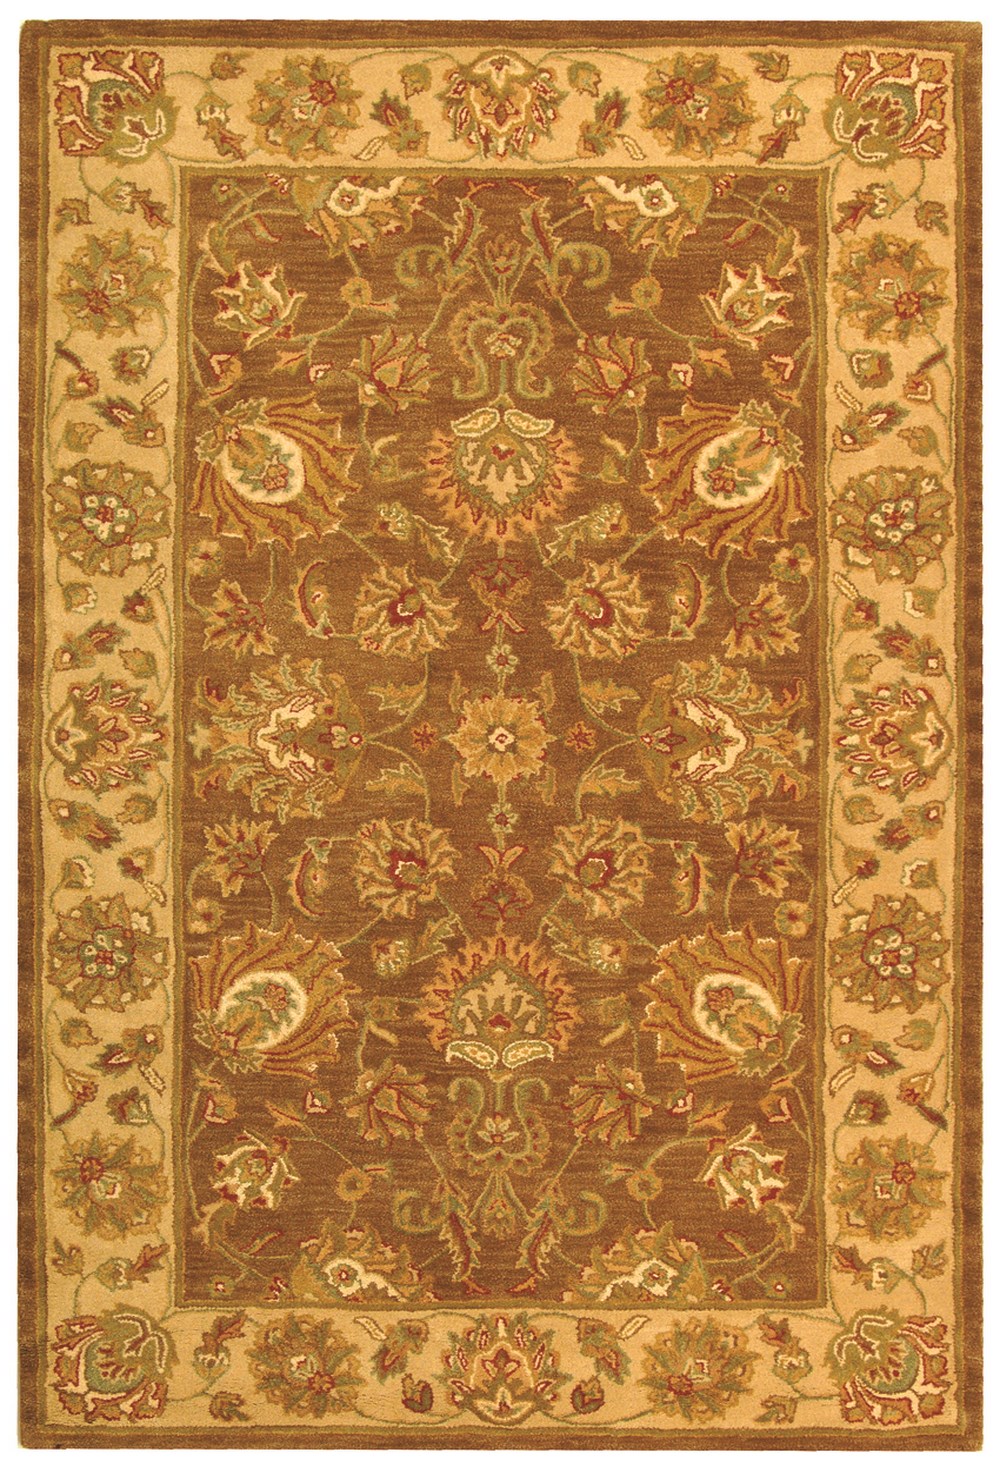 SAFAVIEH Heritage Regis Traditional Wool Area Rug, Brown/Ivory, 4' x 6' - image 1 of 4